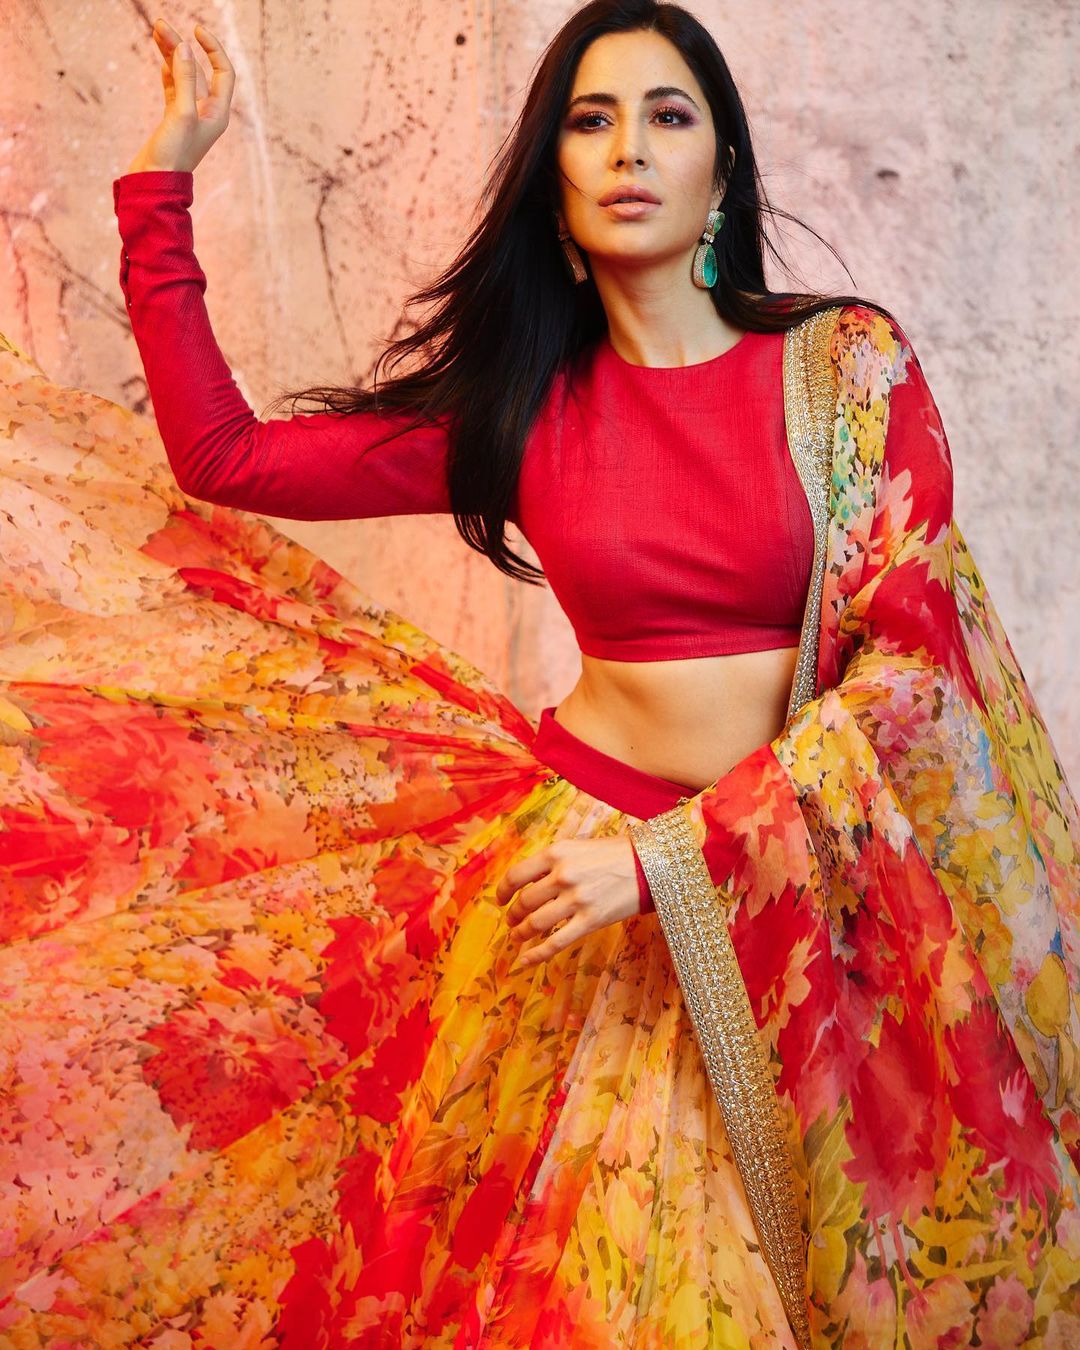 Katrina Kaif looks breathtaking in the floral lehenga